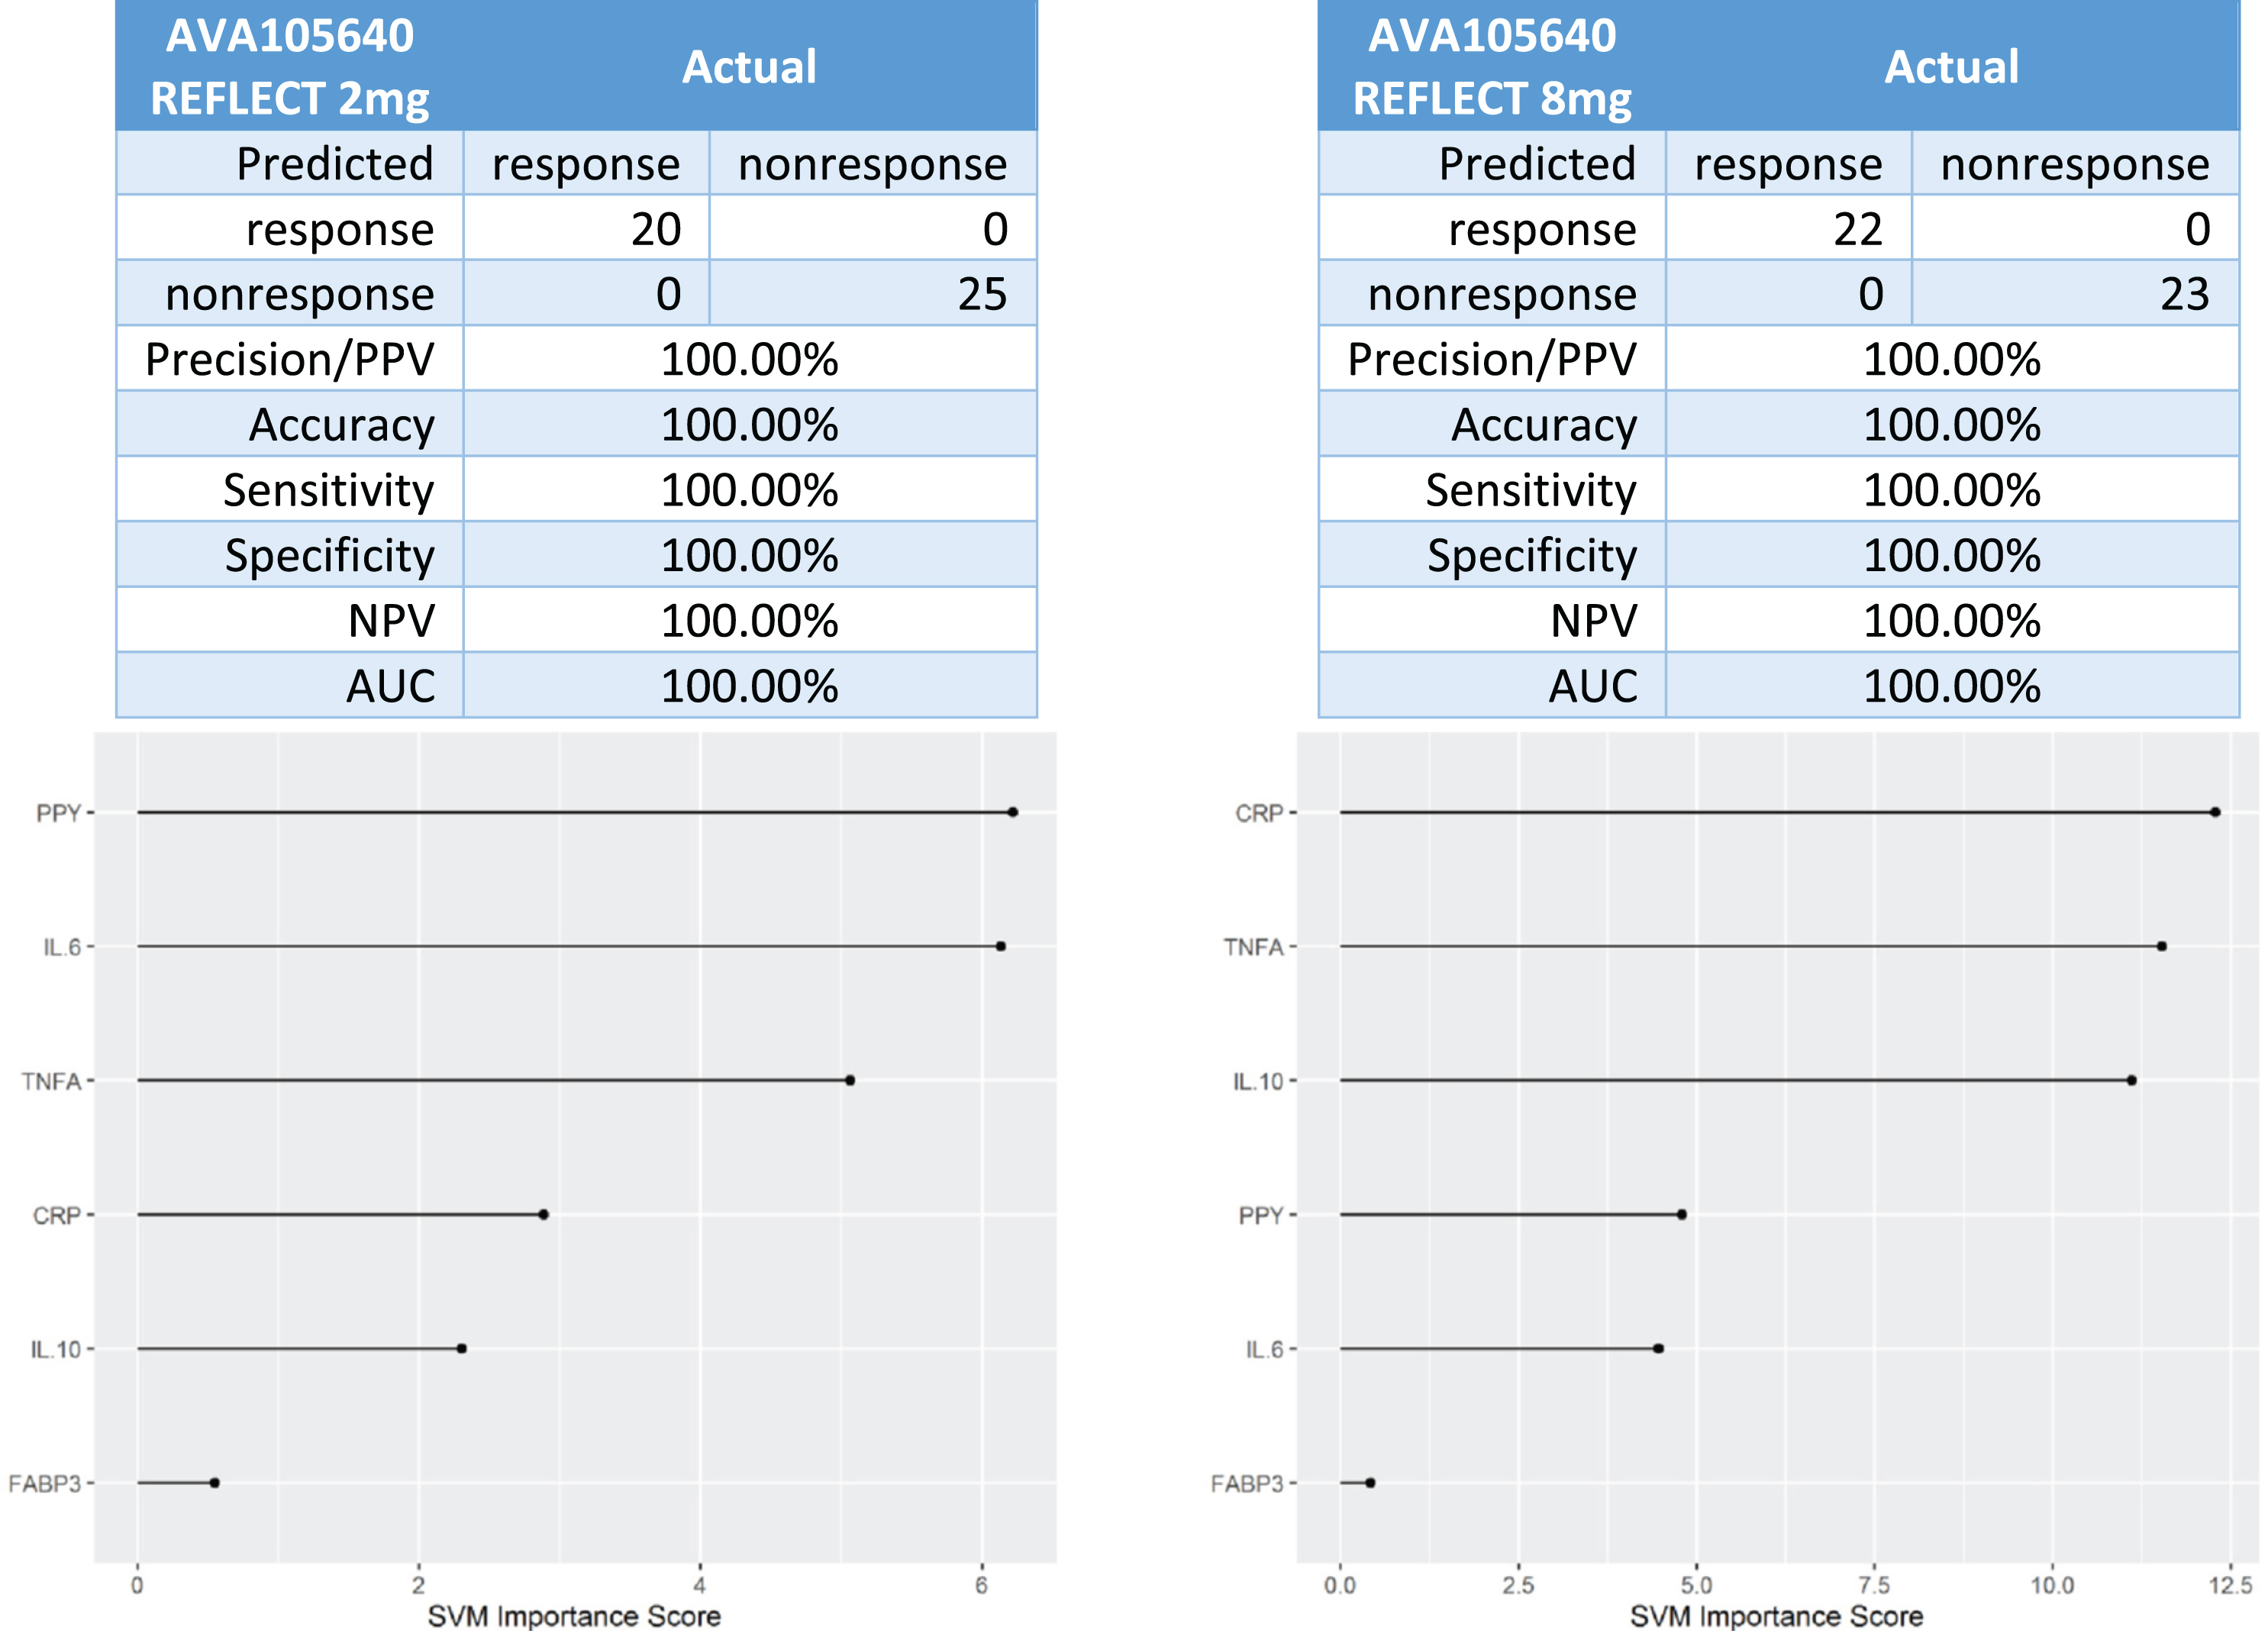 Predictive biomarker accuracy in identifying responders versus non-responders in the Phase 3 trial AV105640.